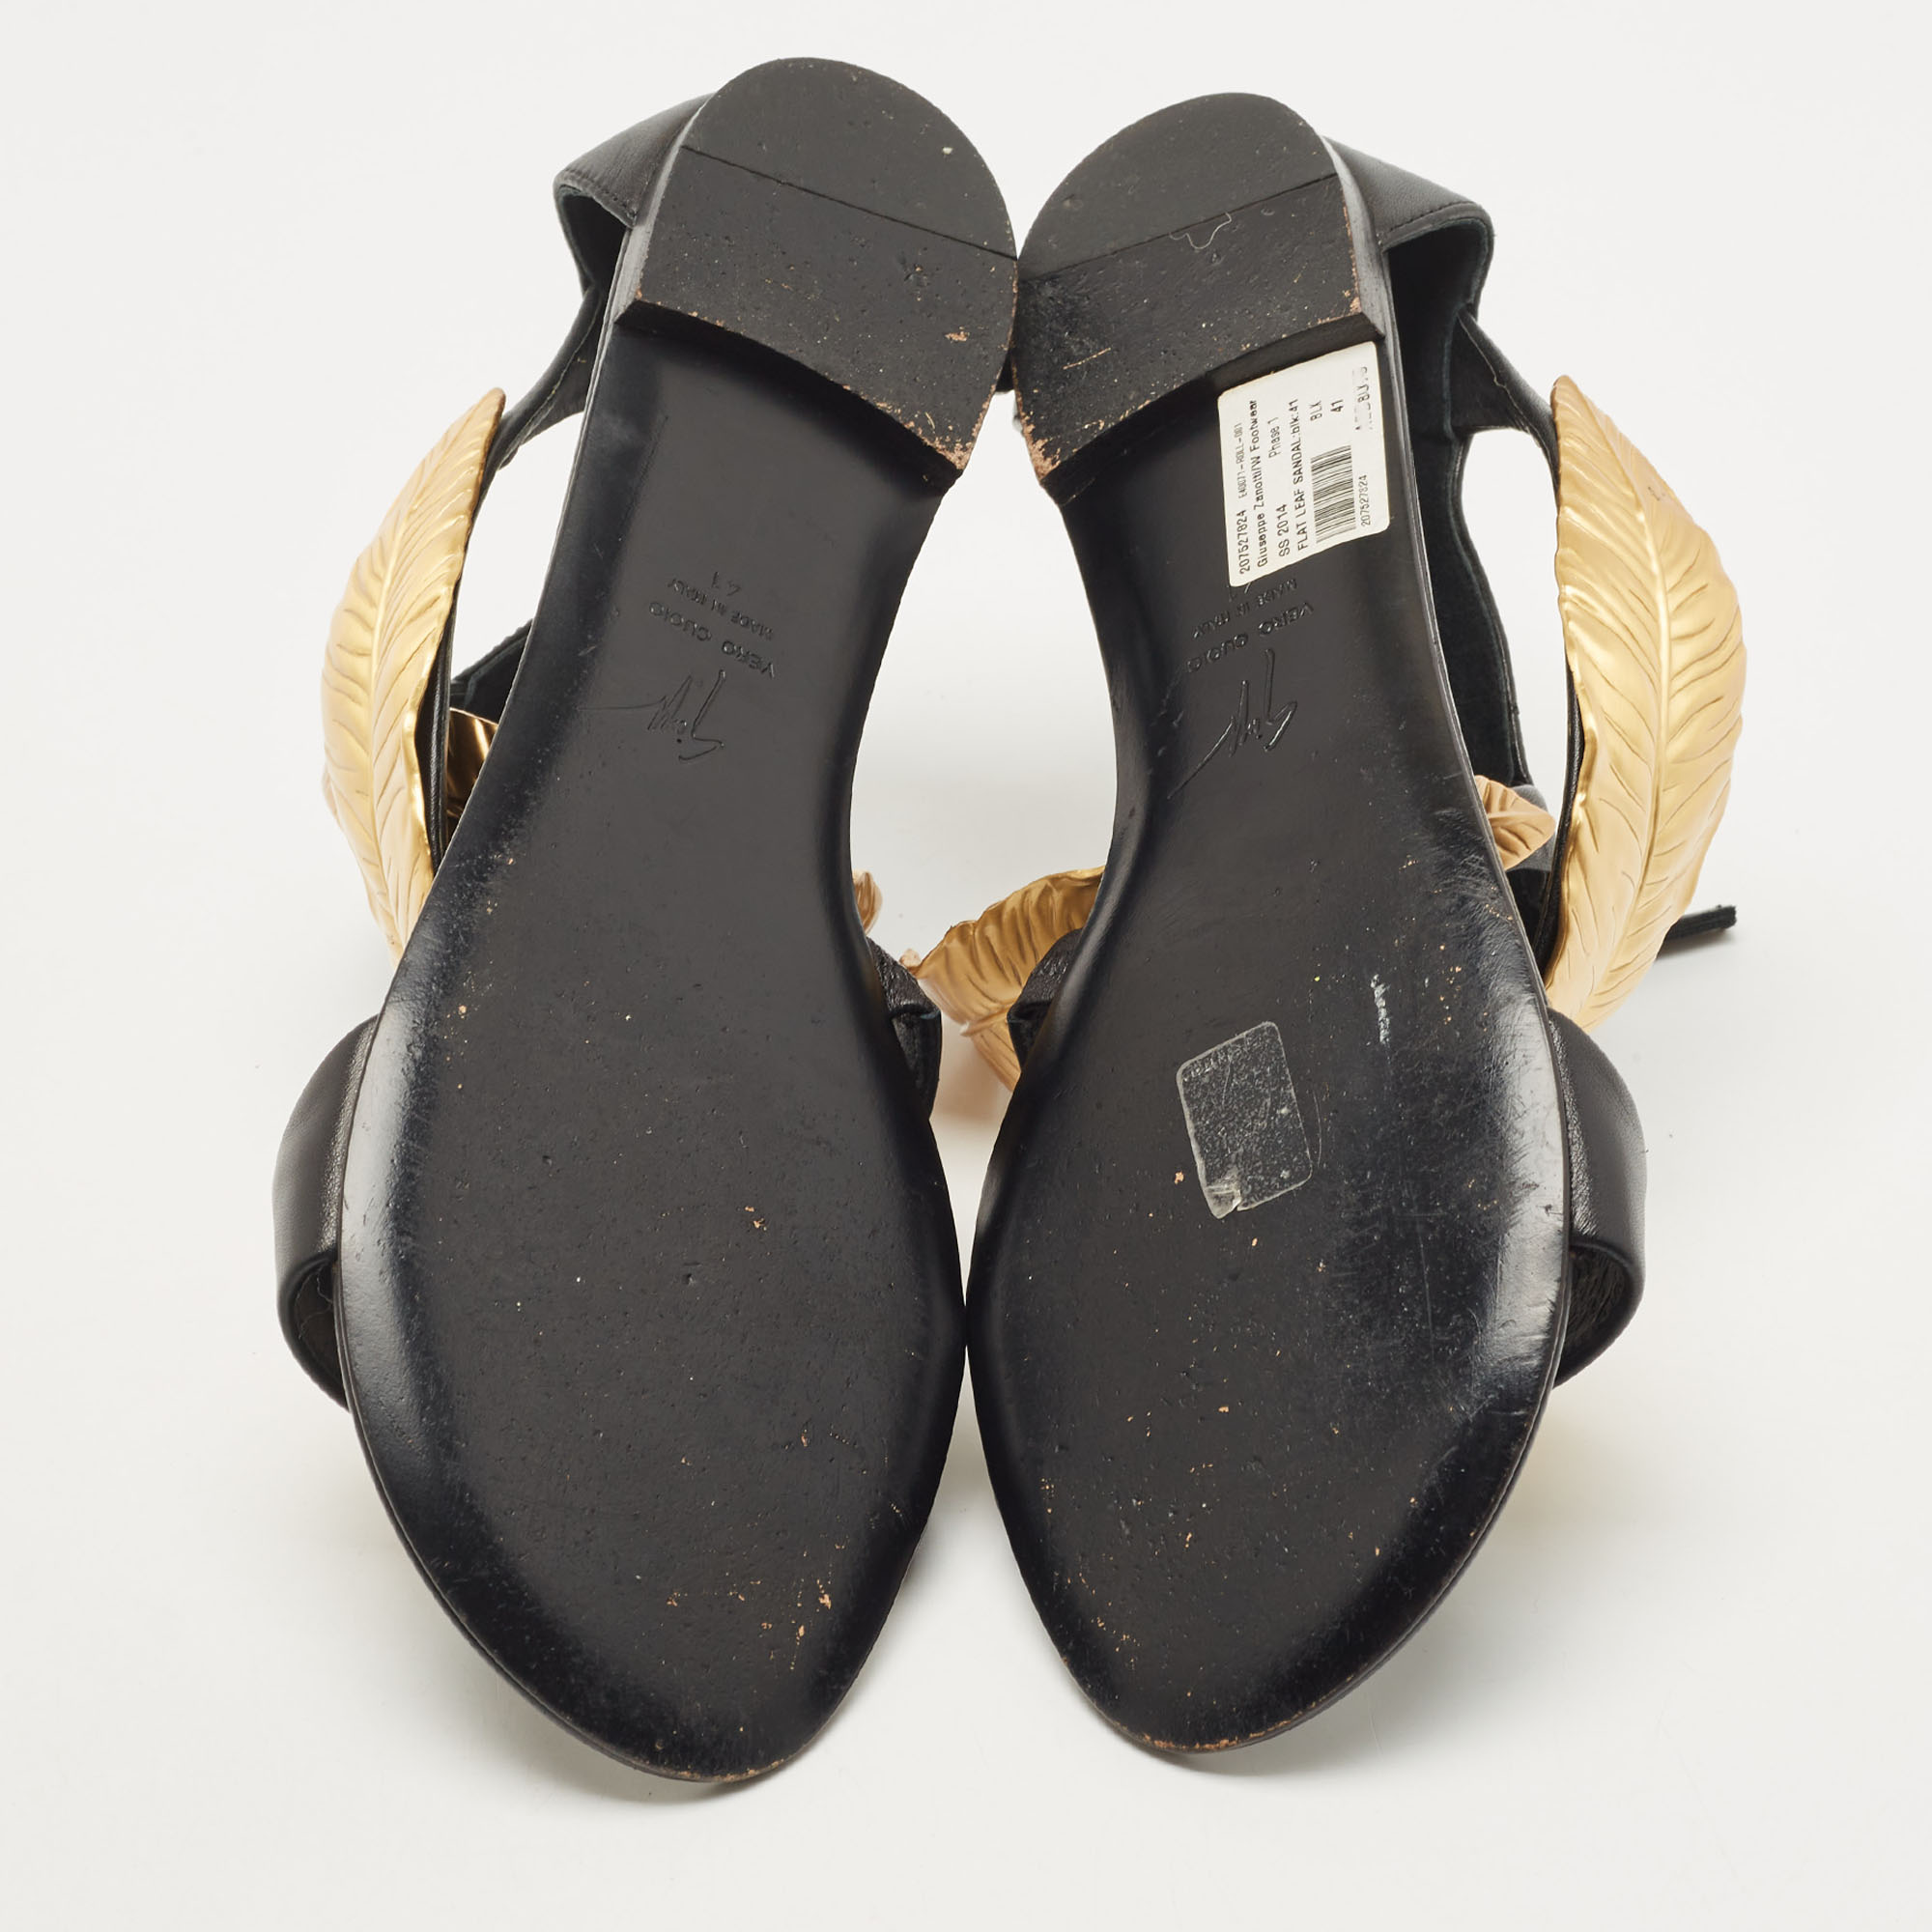 Giuseppe Zanotti Black Leather Leaf Ankle Cuff Sandals Size 41